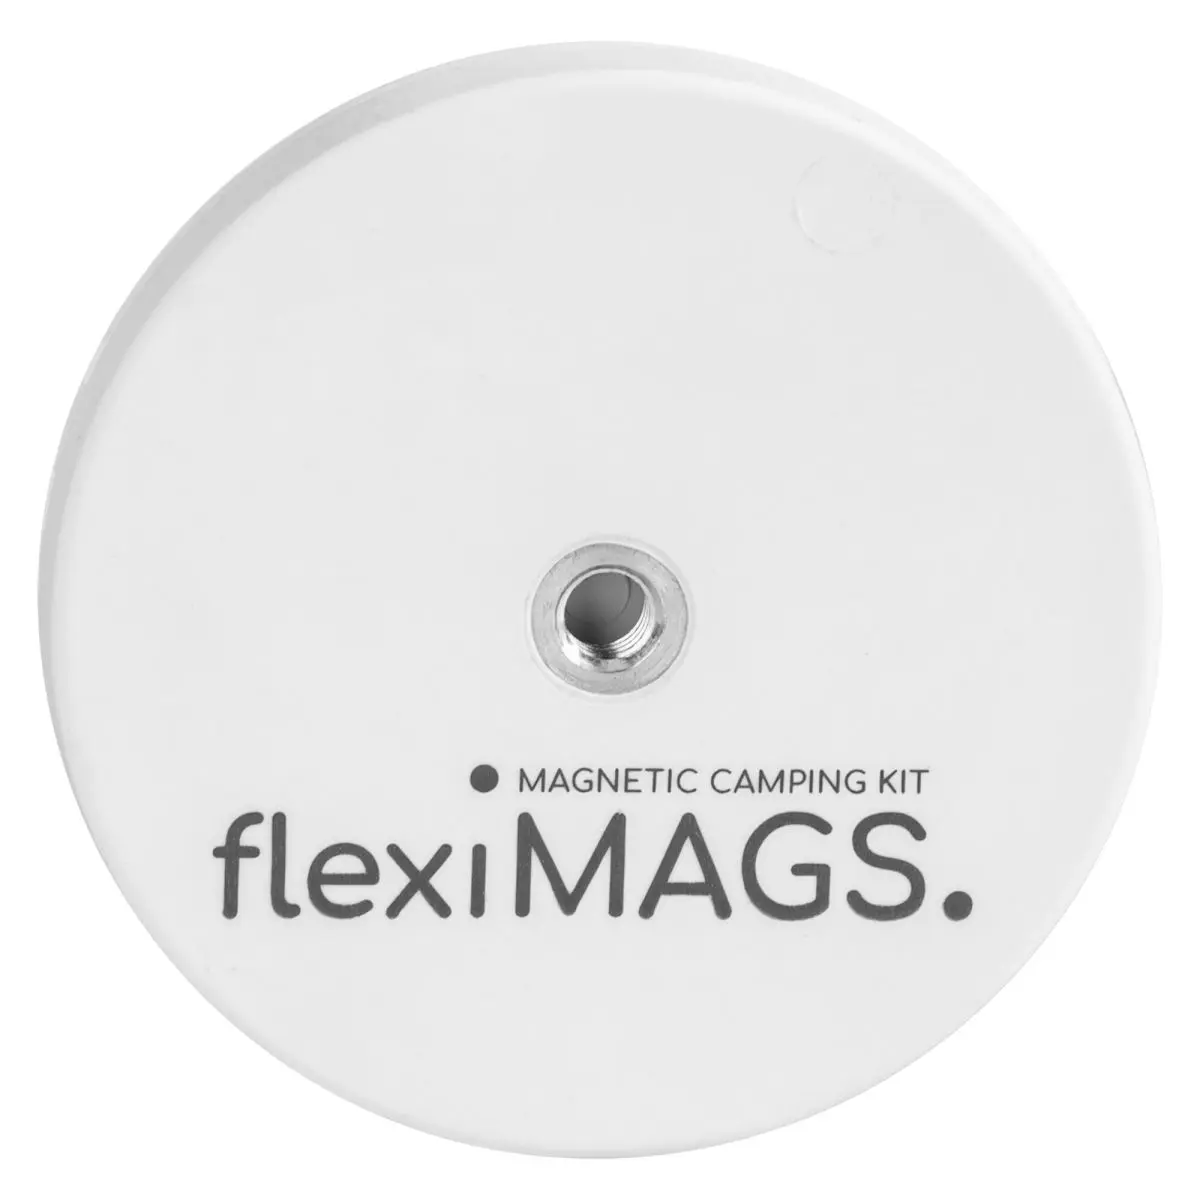 Magnet rund flexiMAGS - flexiMAG-66, 2er Set wei